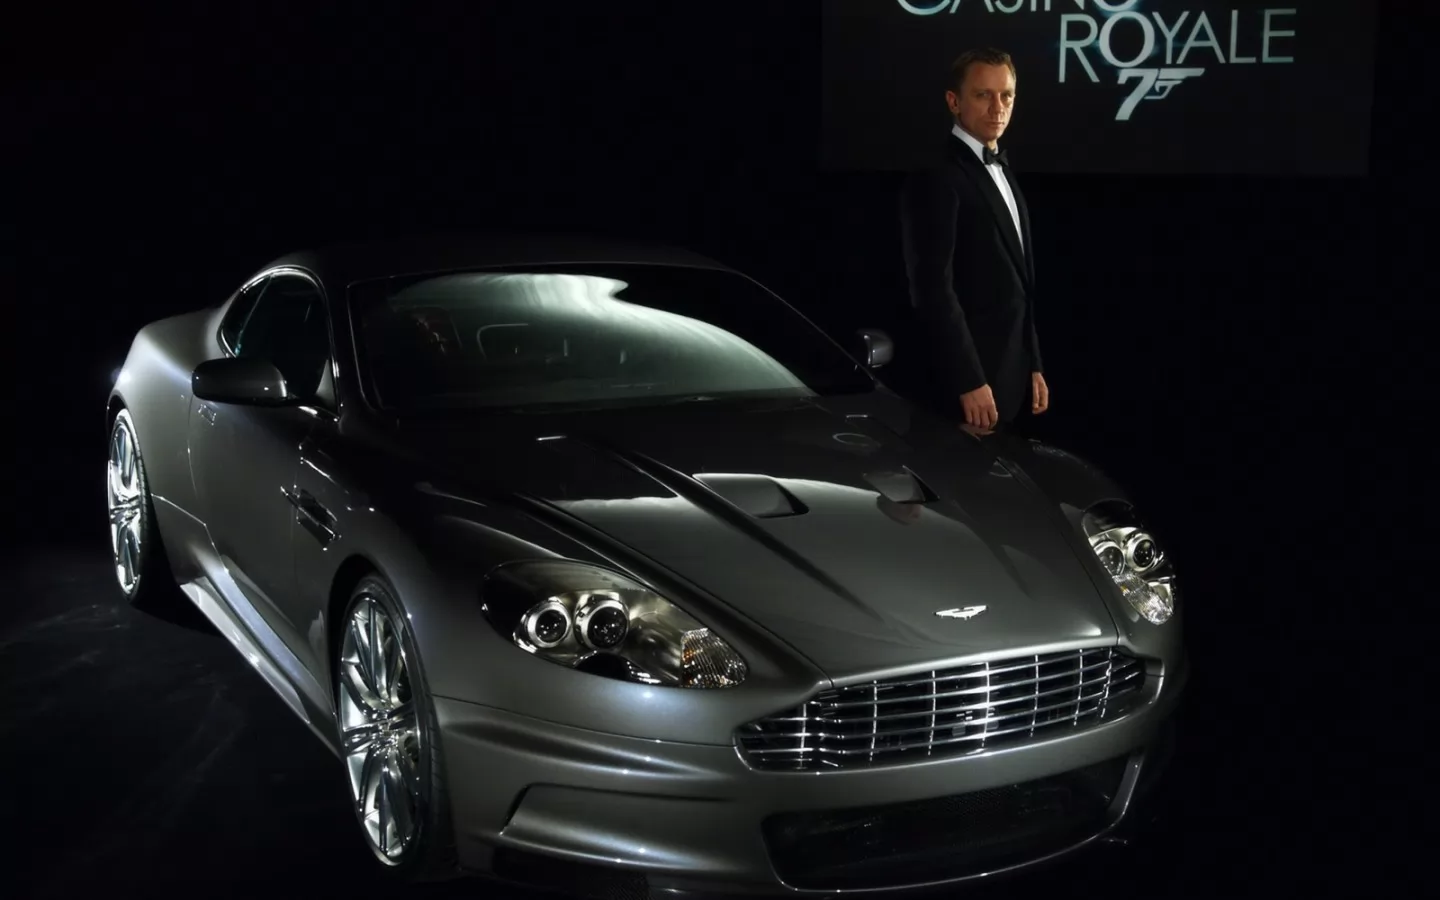 DBS J. Bond in C.Royale, Aston Martin, ,  